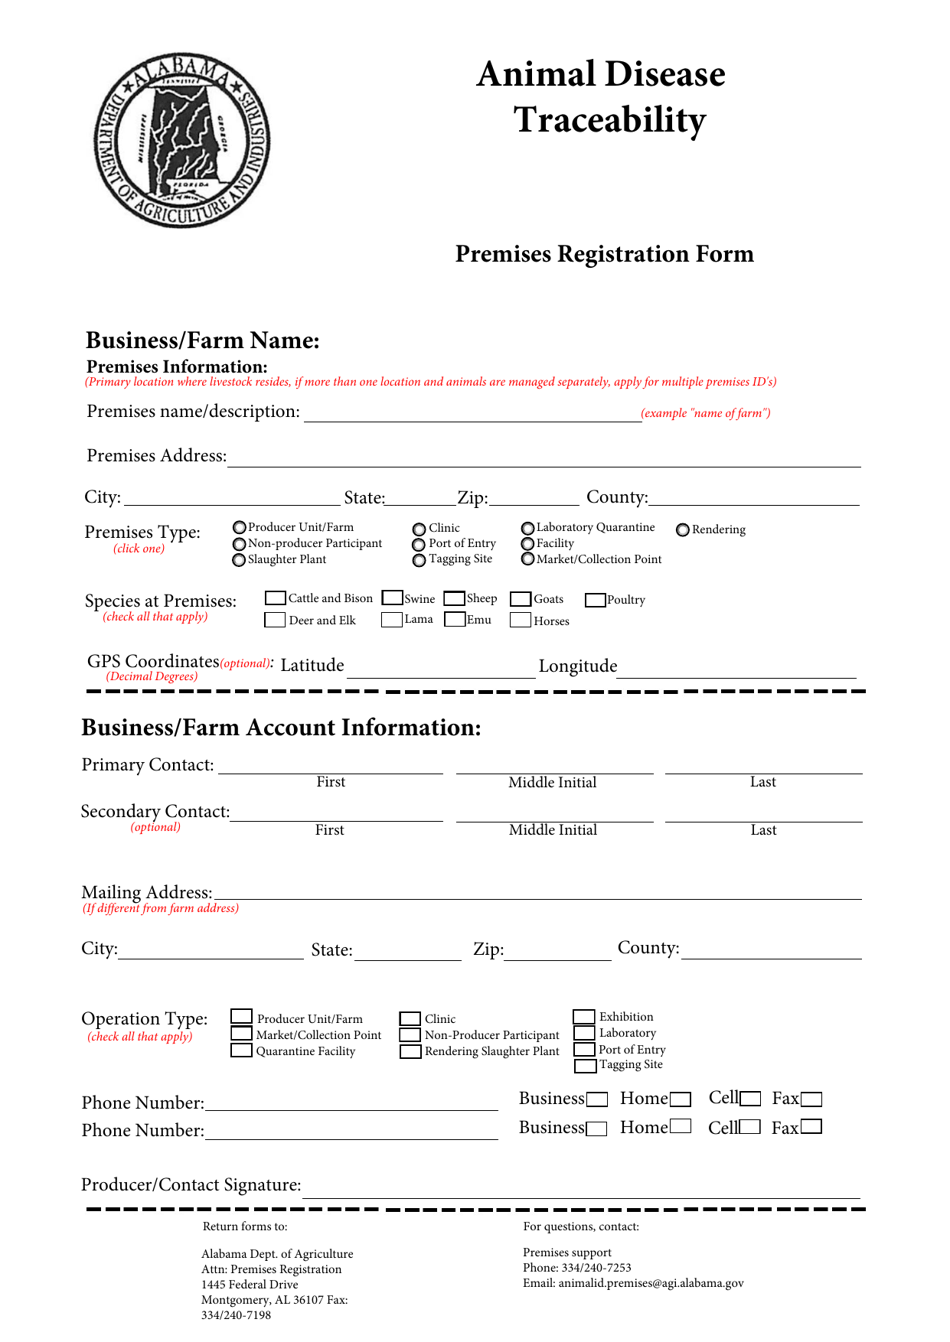 Animal Disease Traceability Premises Registration Form - Alabama, Page 1